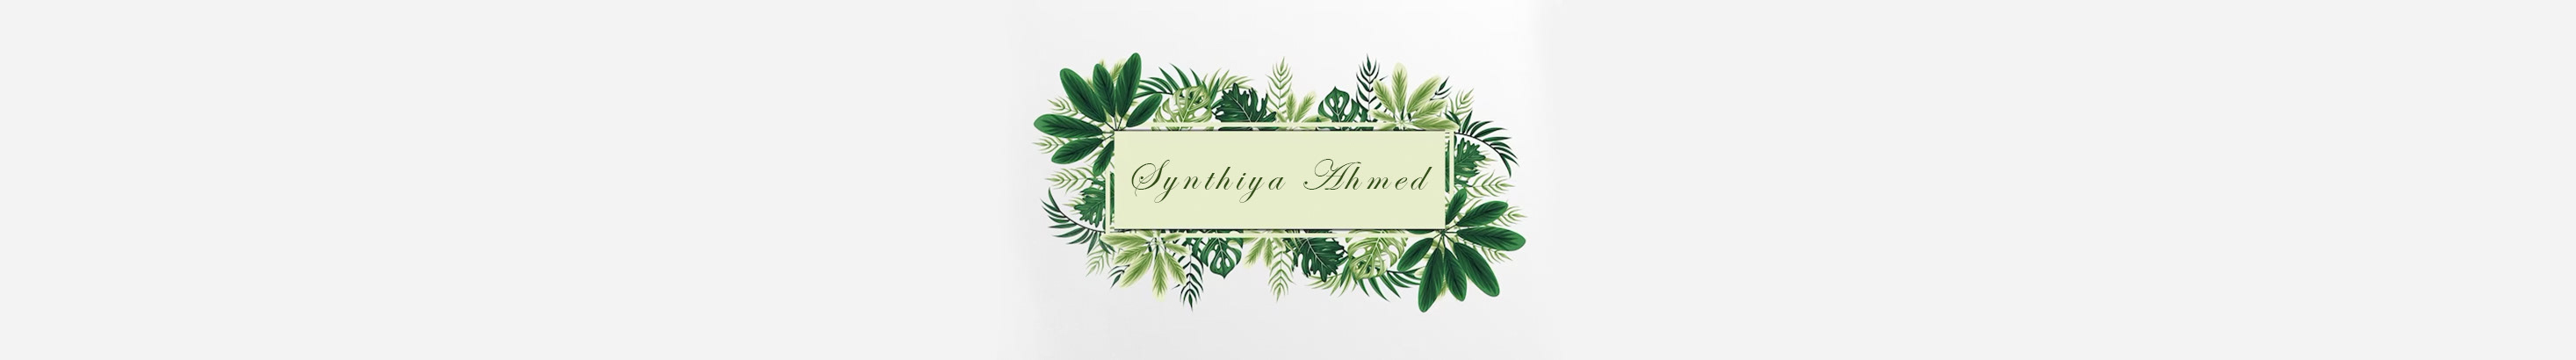 Banner de perfil de Synthiya Ahmed